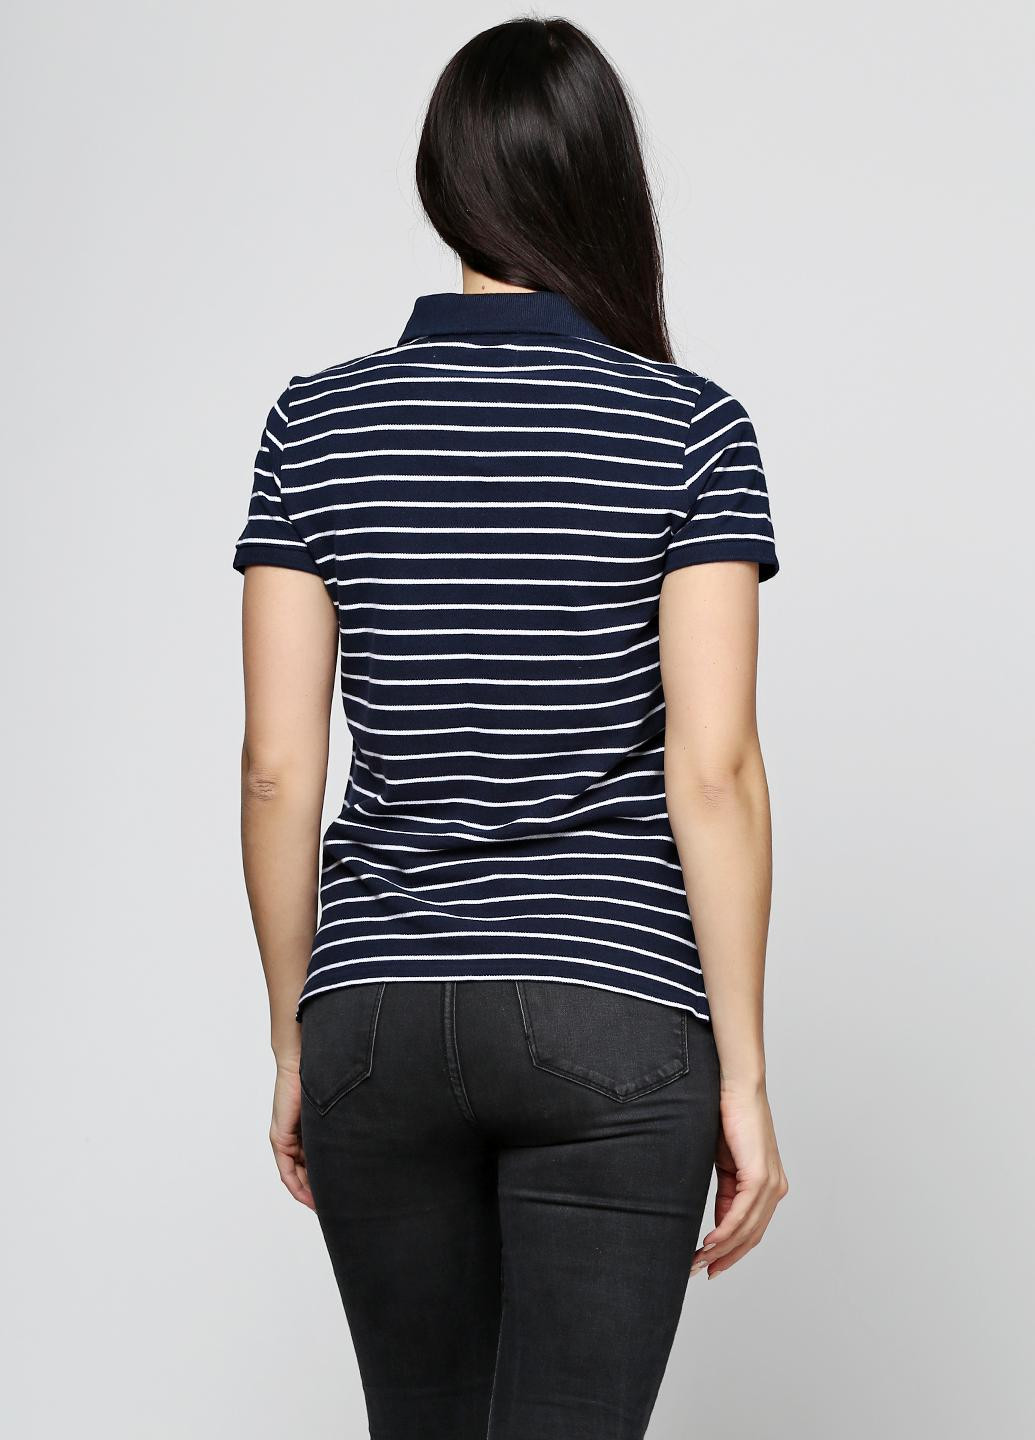 Темно-синяя женская футболка-поло Abercrombie & Fitch в полоску